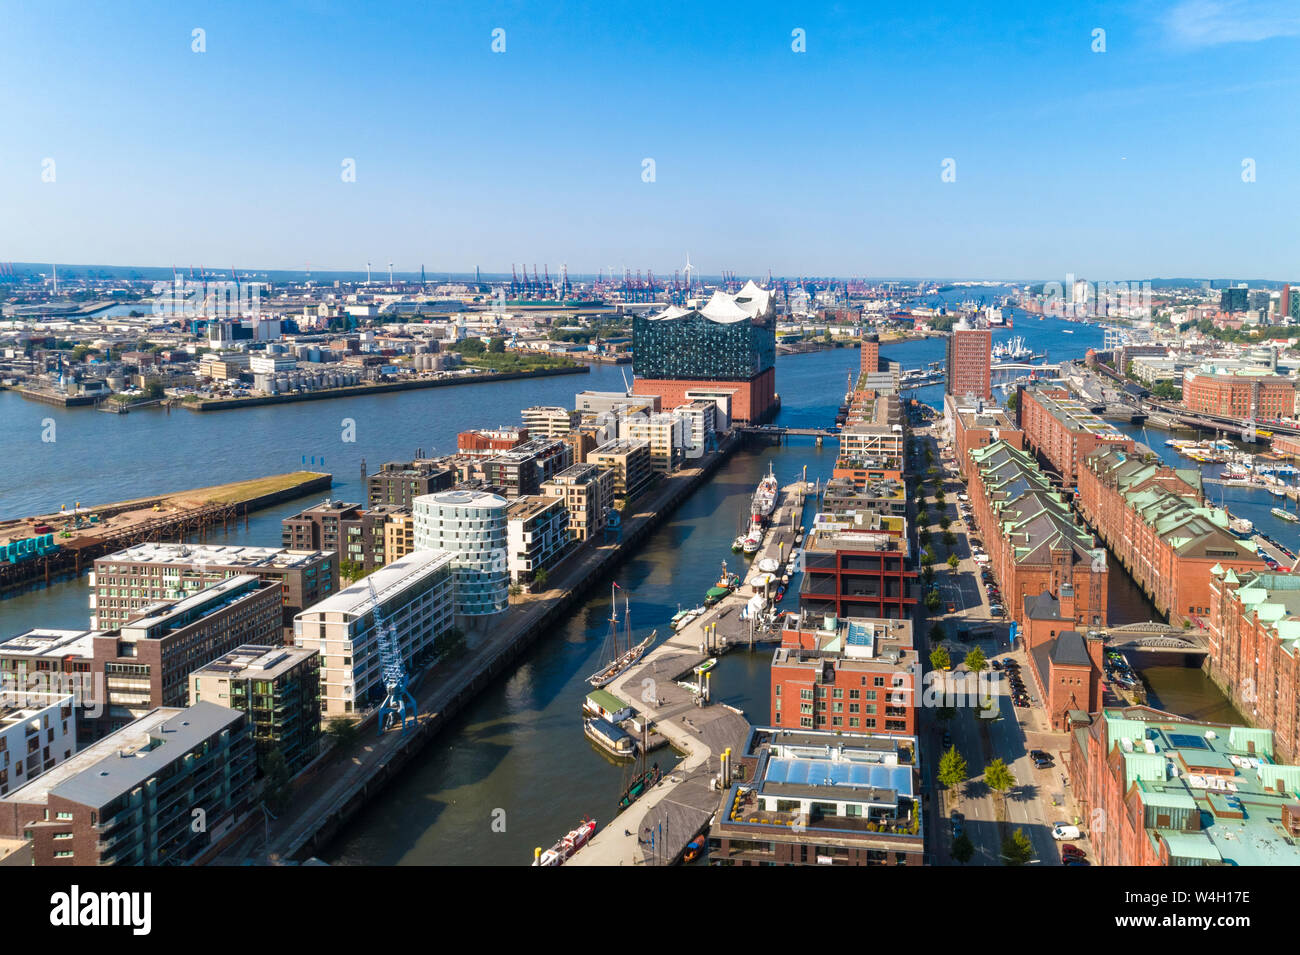 Vue urbaine avec Hafencity, Speicherstadt et Elbphilharmonie, Hambourg, Allemagne Banque D'Images